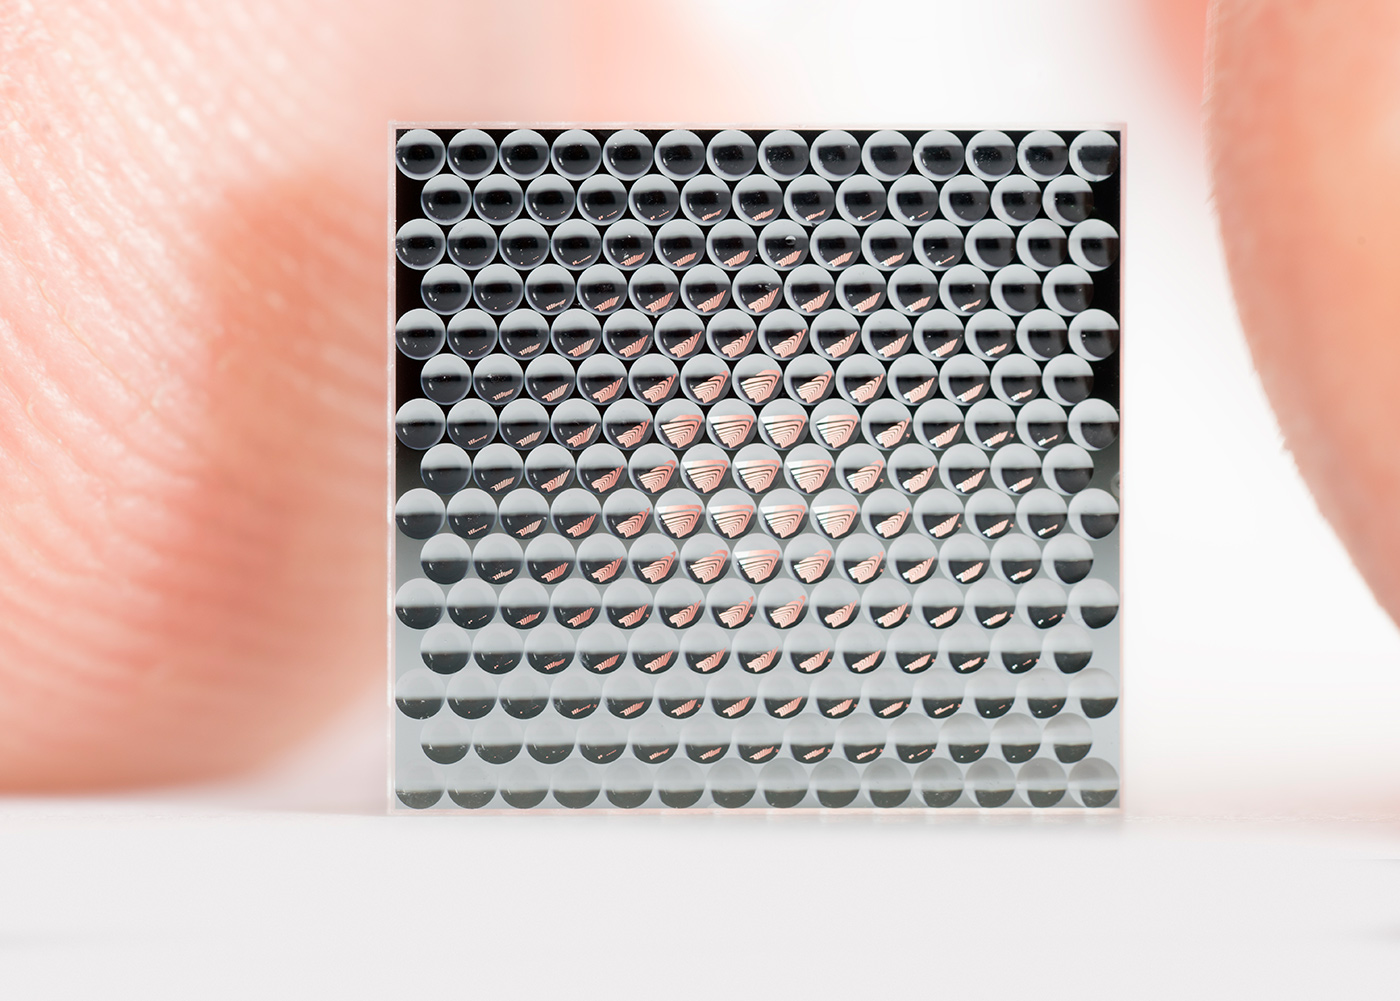 Micro lens array developed by Fraunhofer IOF.